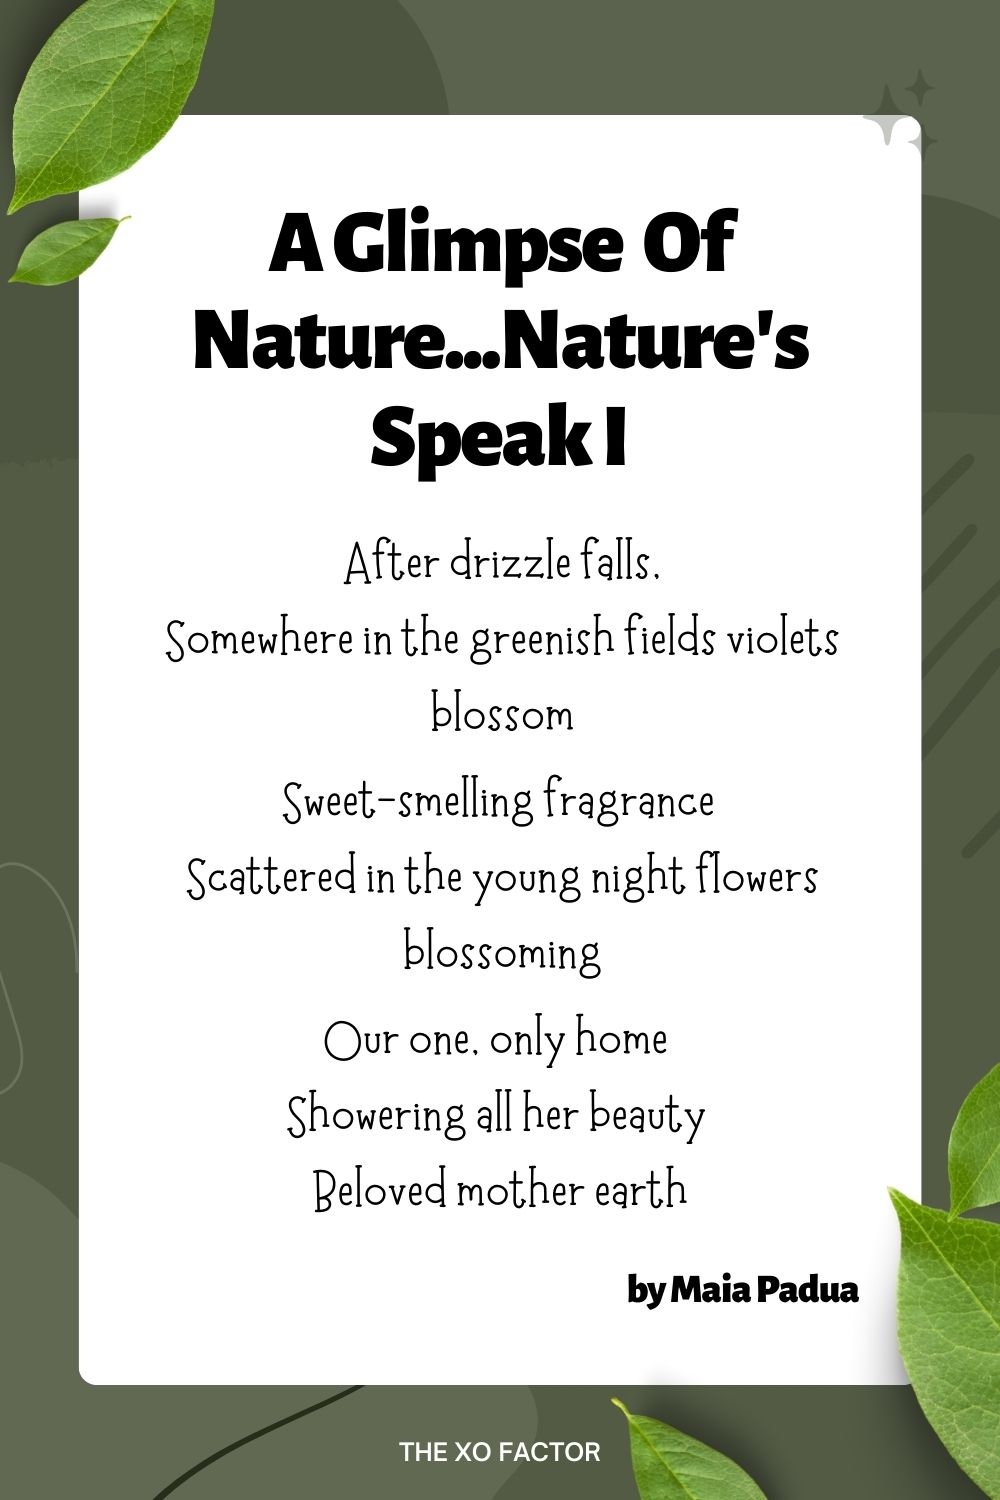 A Glimpse Of Nature...Nature's Speak I Poem by Maia Padua